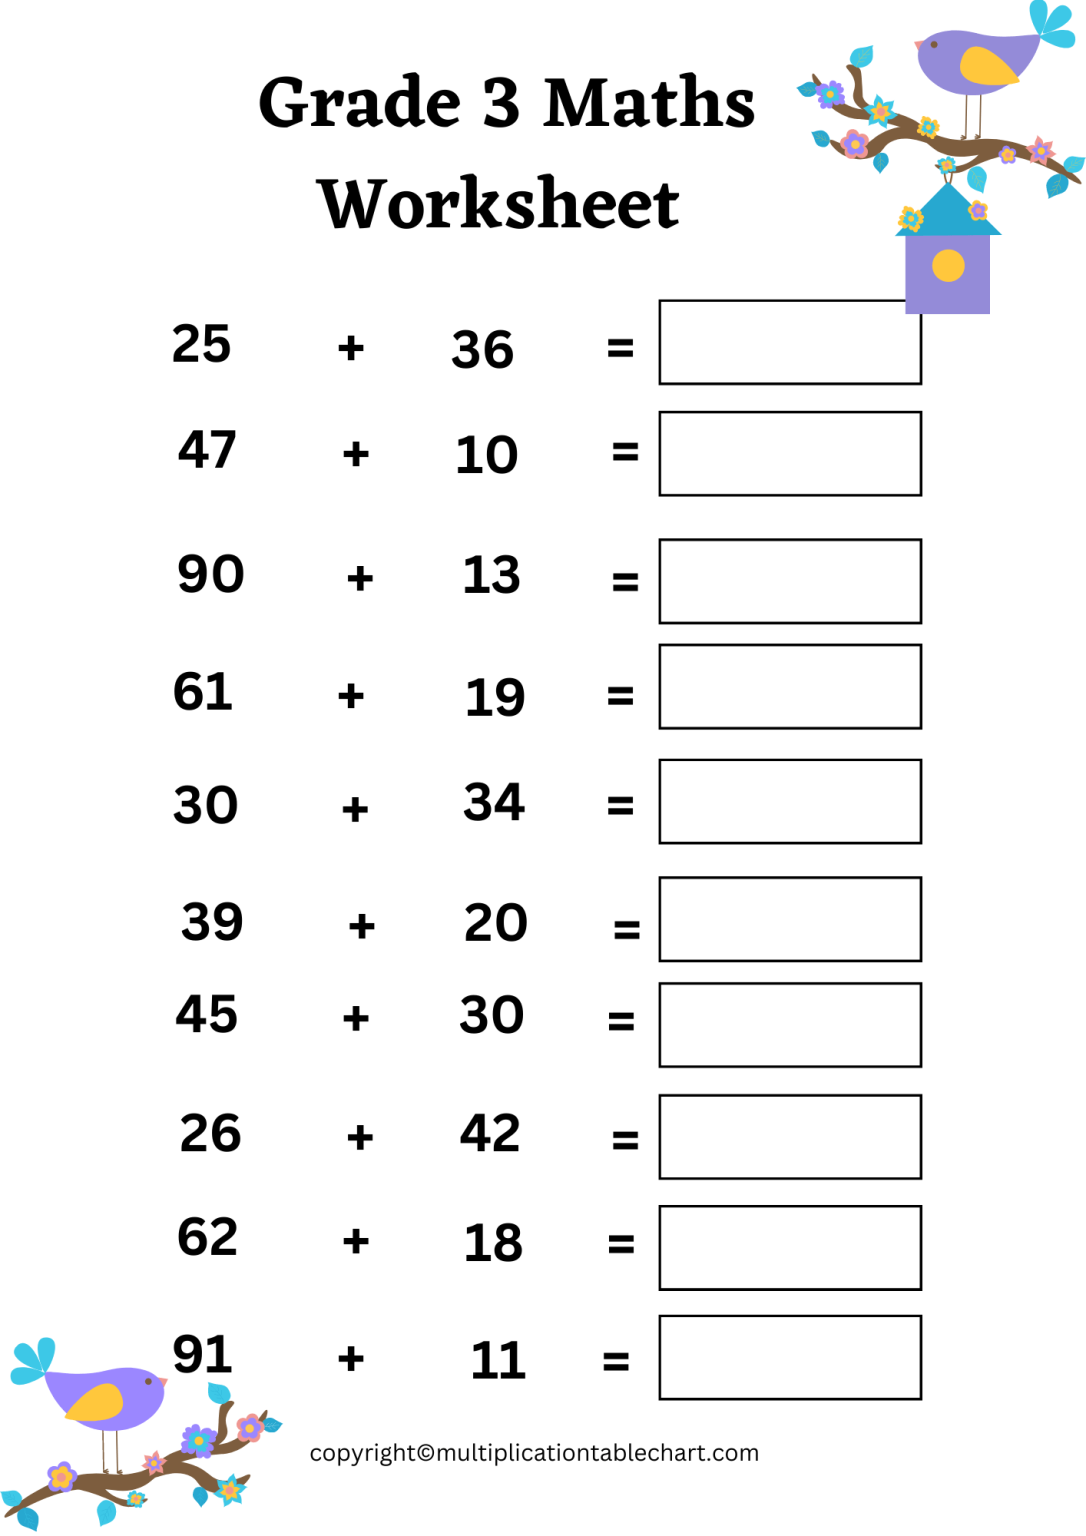 grade-3-maths-worksheet-for-multiplication-free-printable